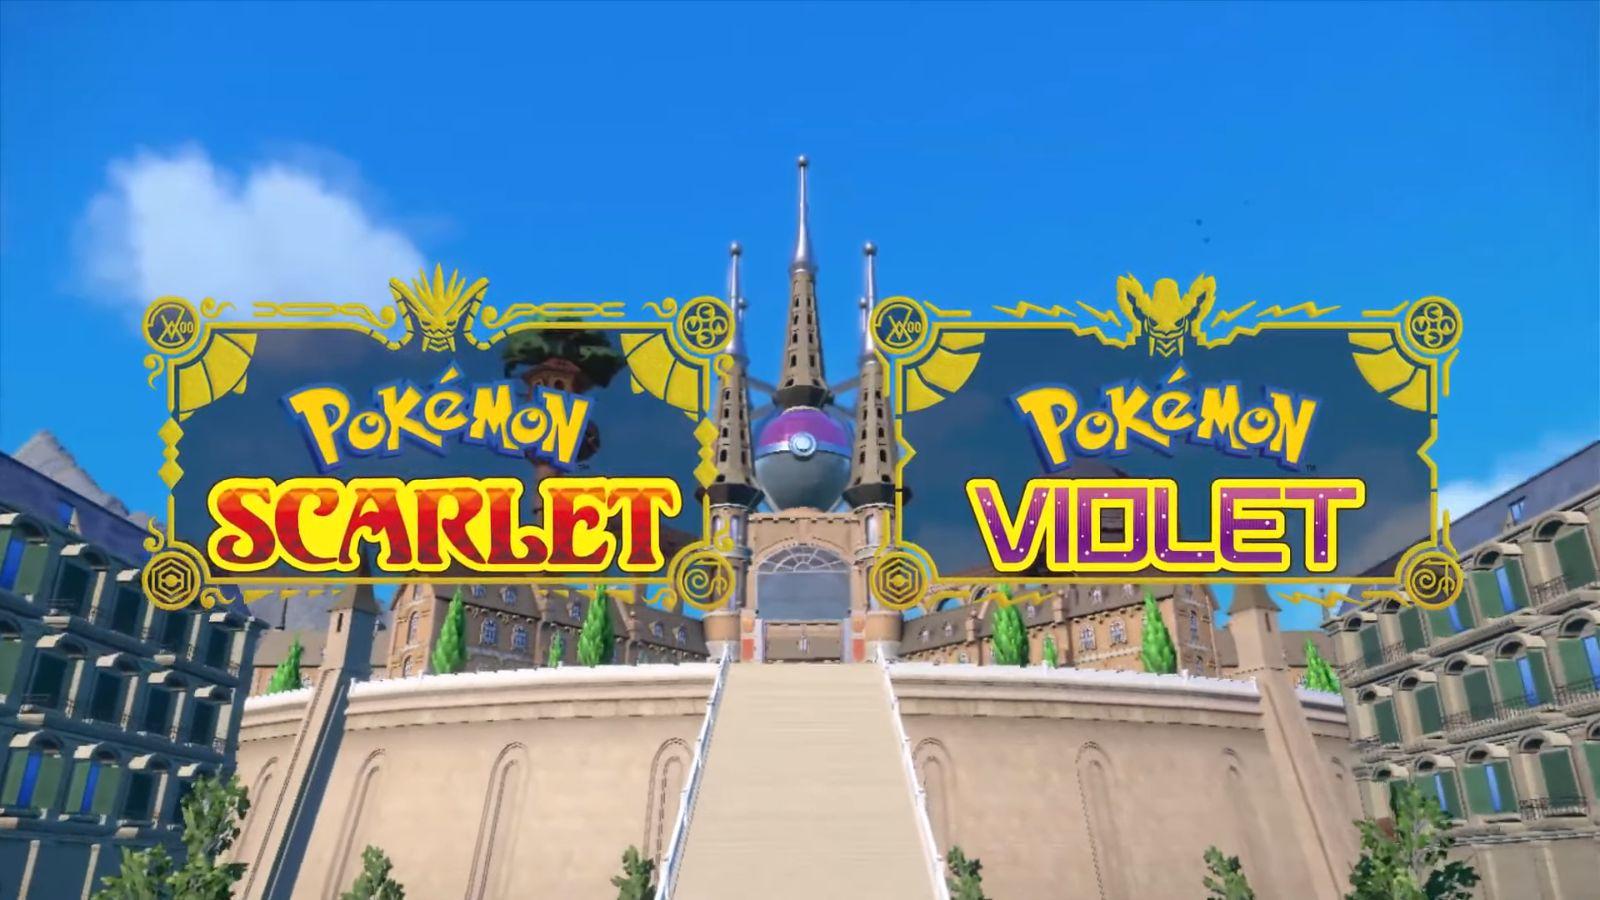 Pokemon Scarlet and Violet update 1.1.0